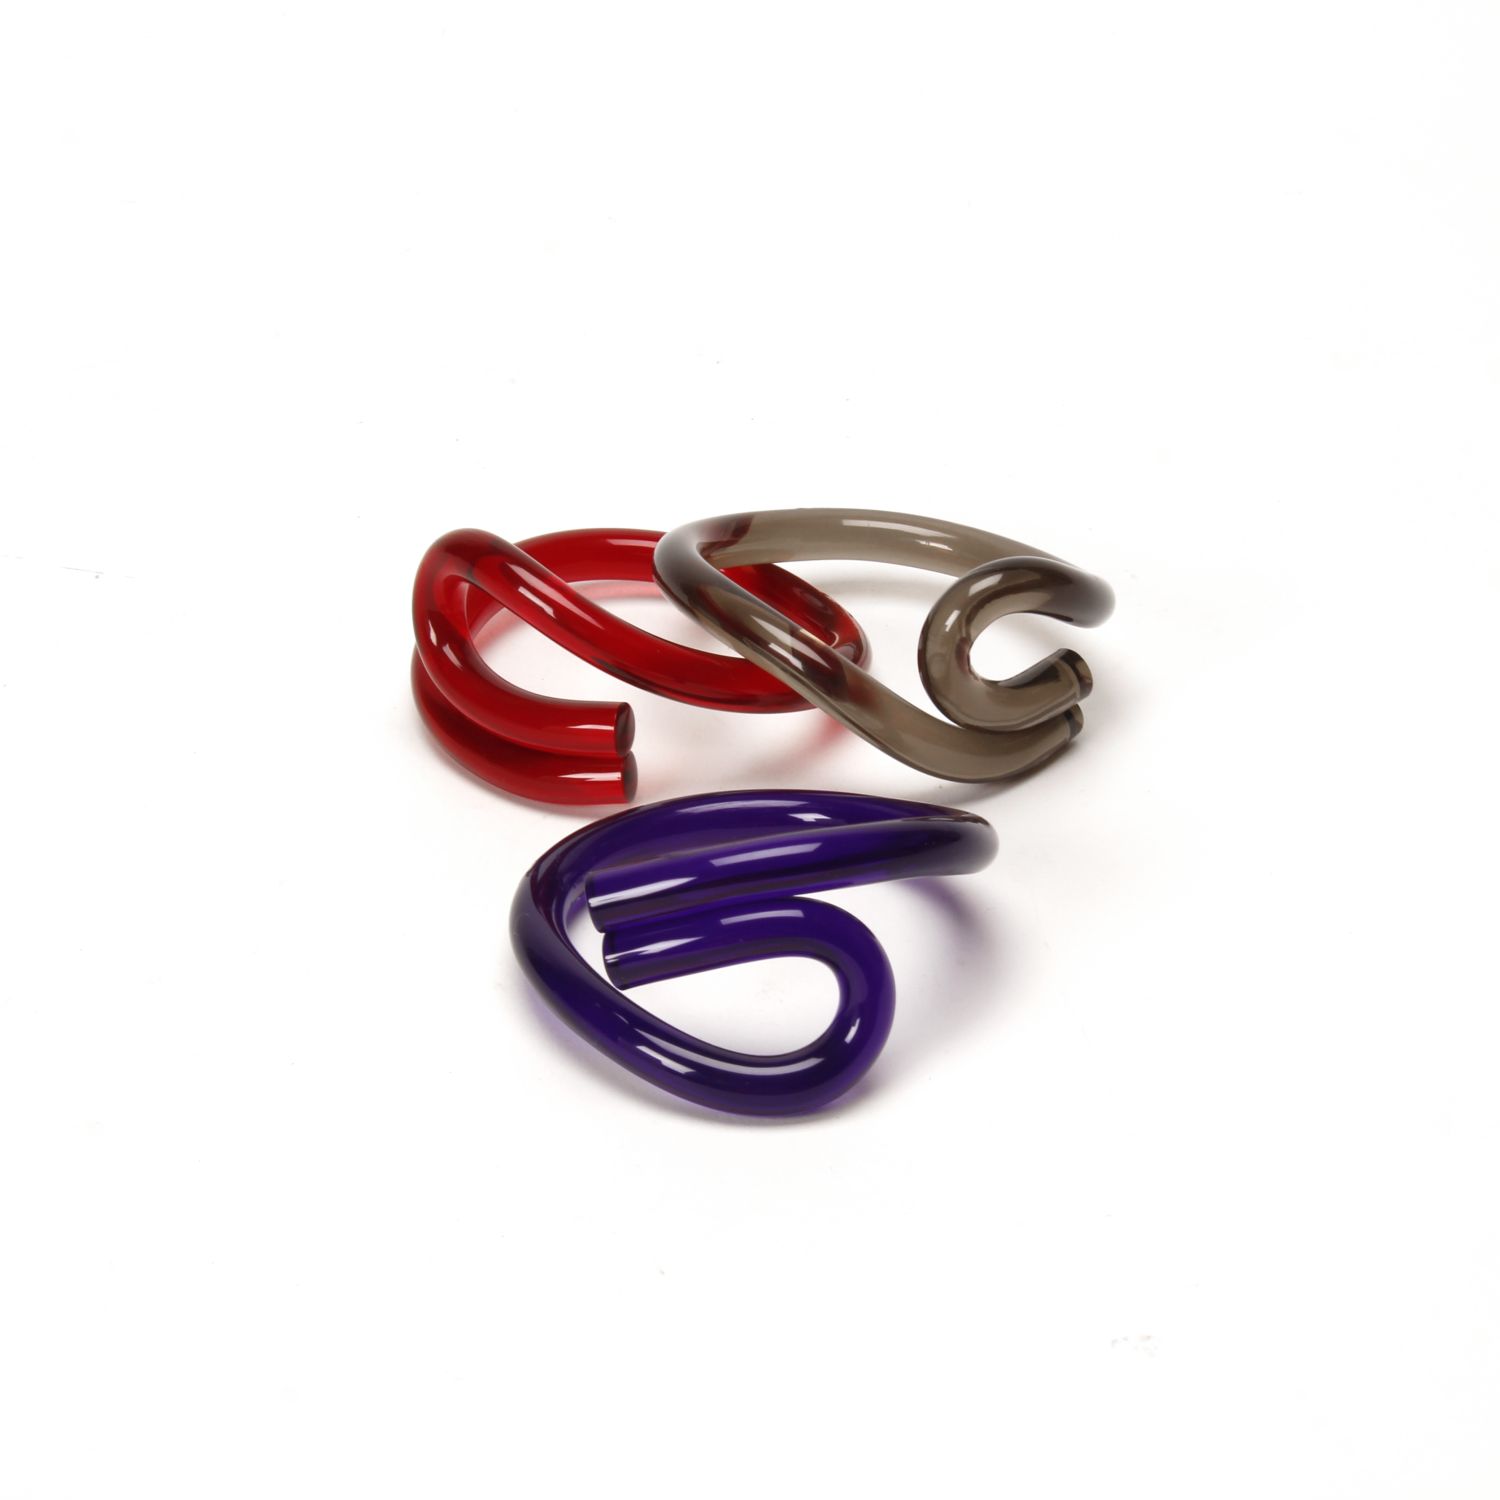 Corey Moranis: Loop Bracelet Smoke Product Image 4 of 4